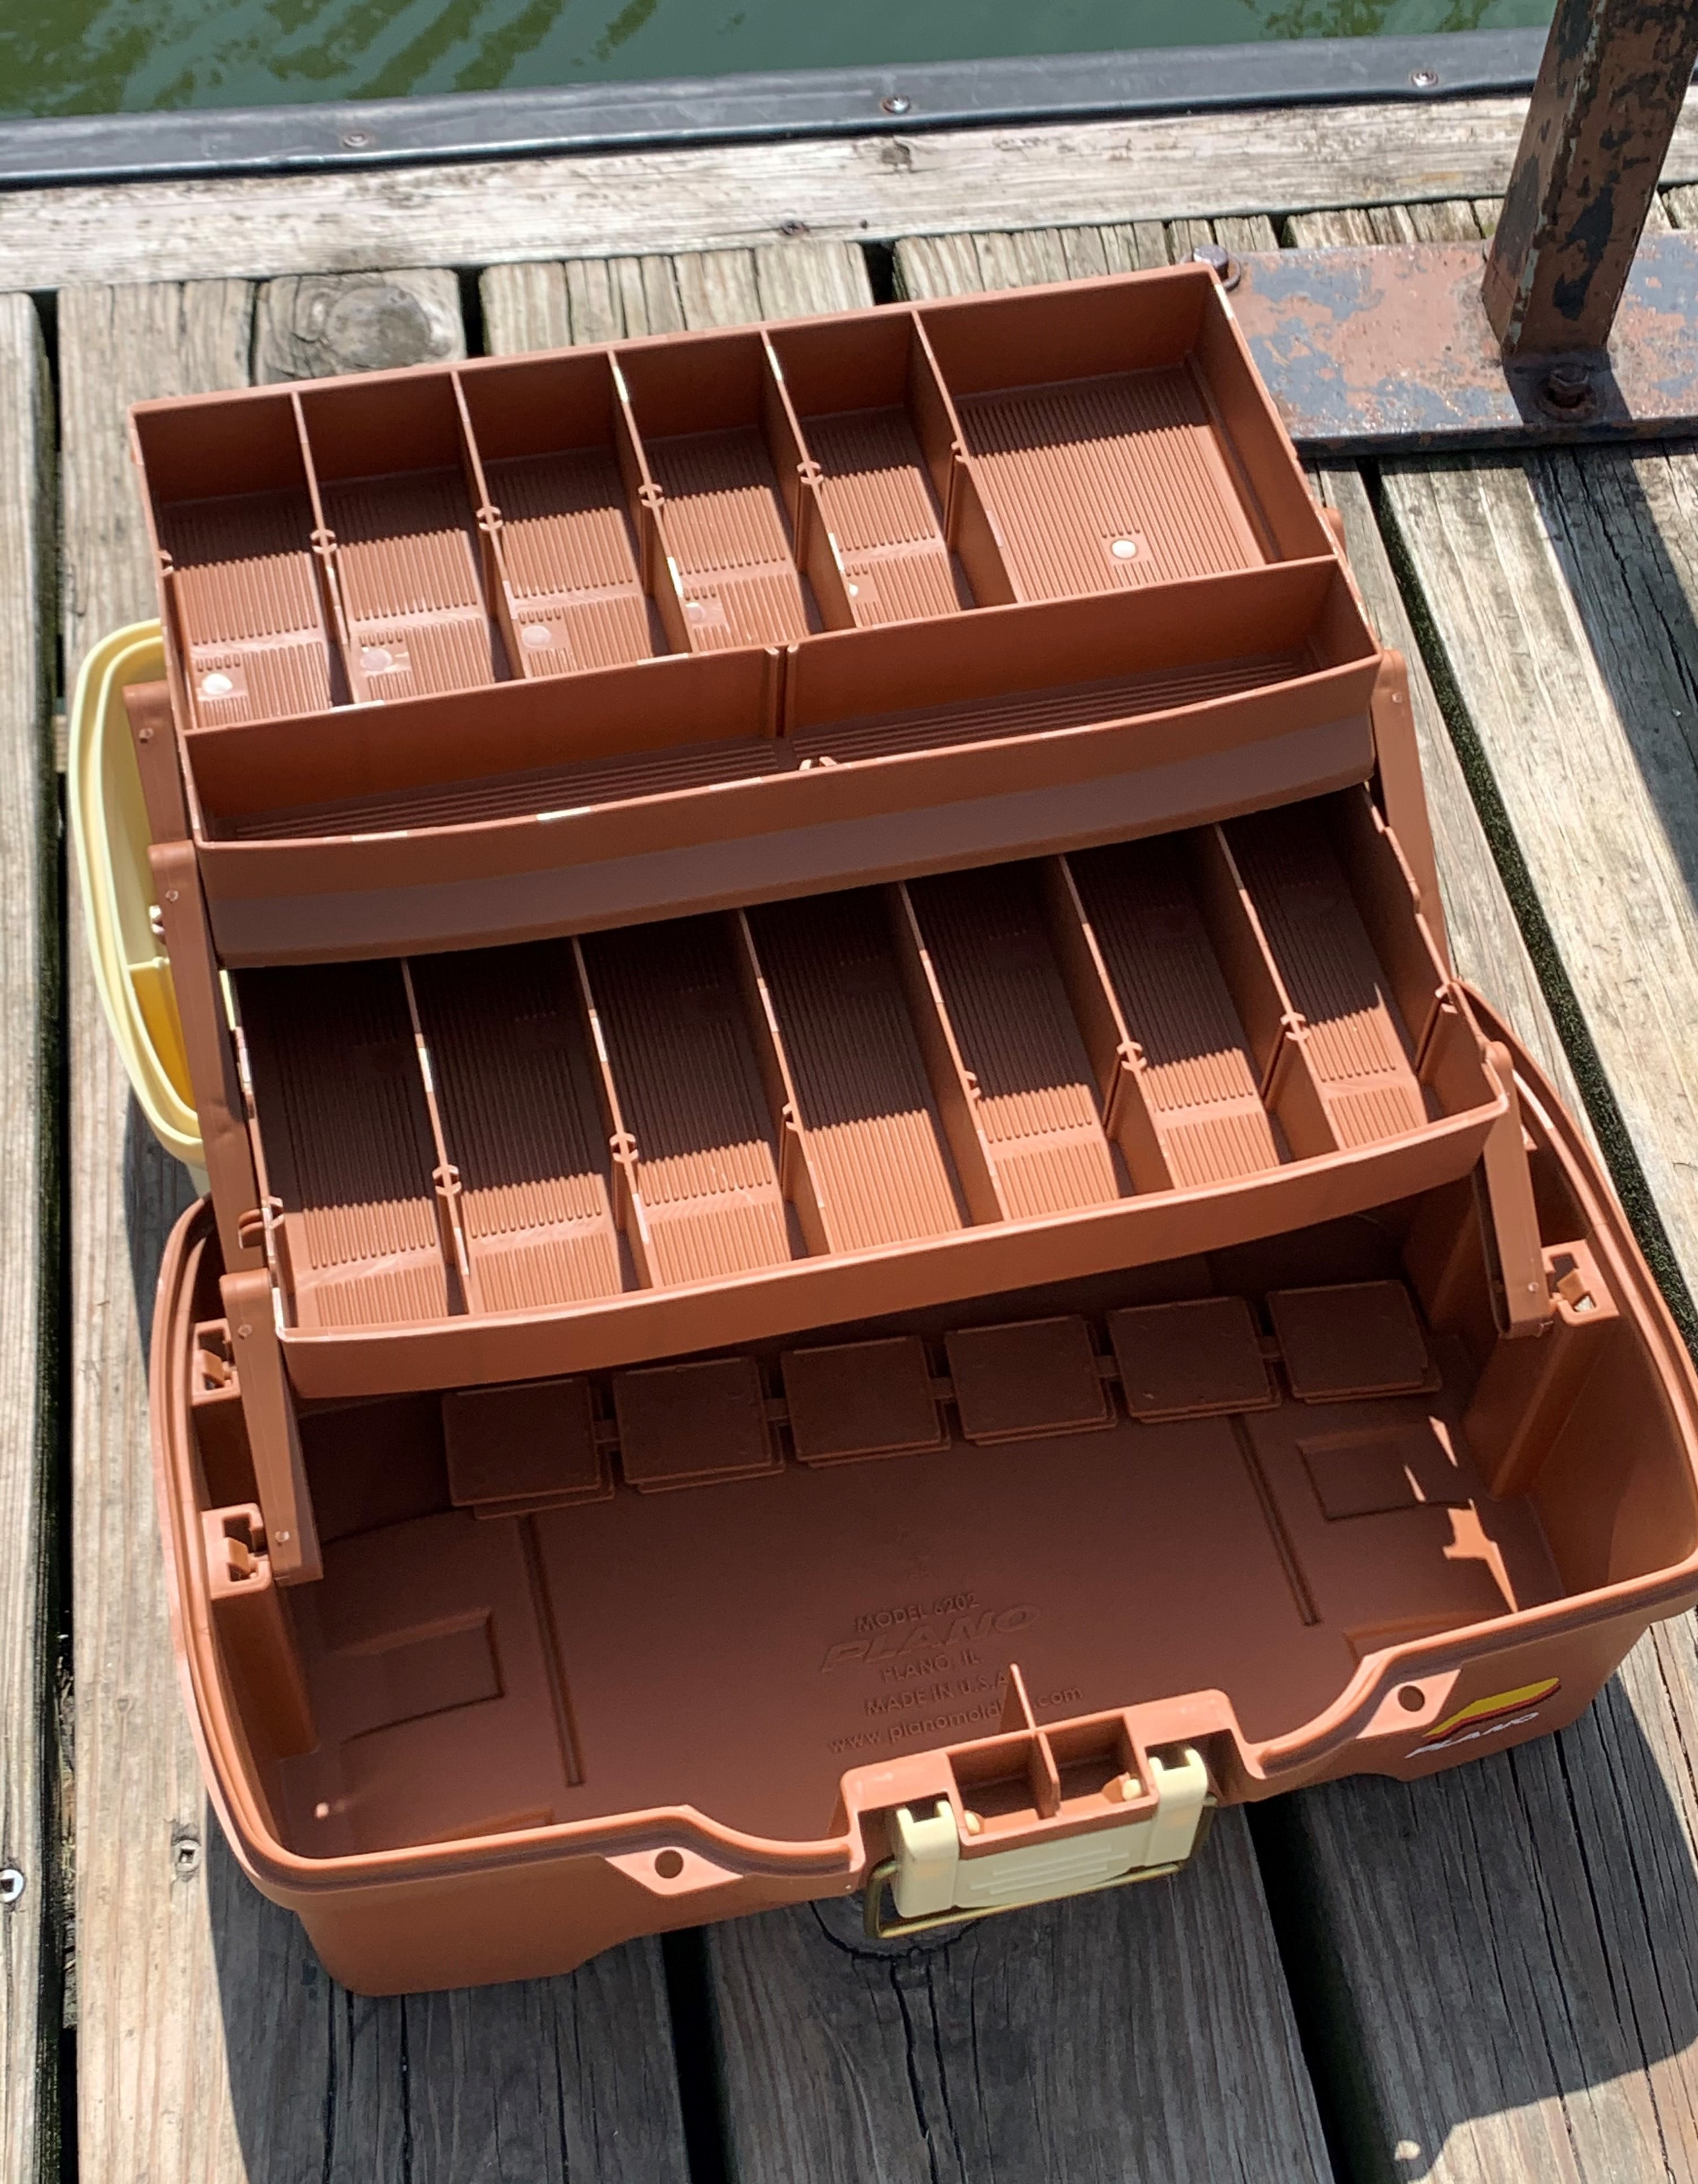 Vintage Plano 6303 Plastic Tackle Box 3 Tray Lure Organizer USA